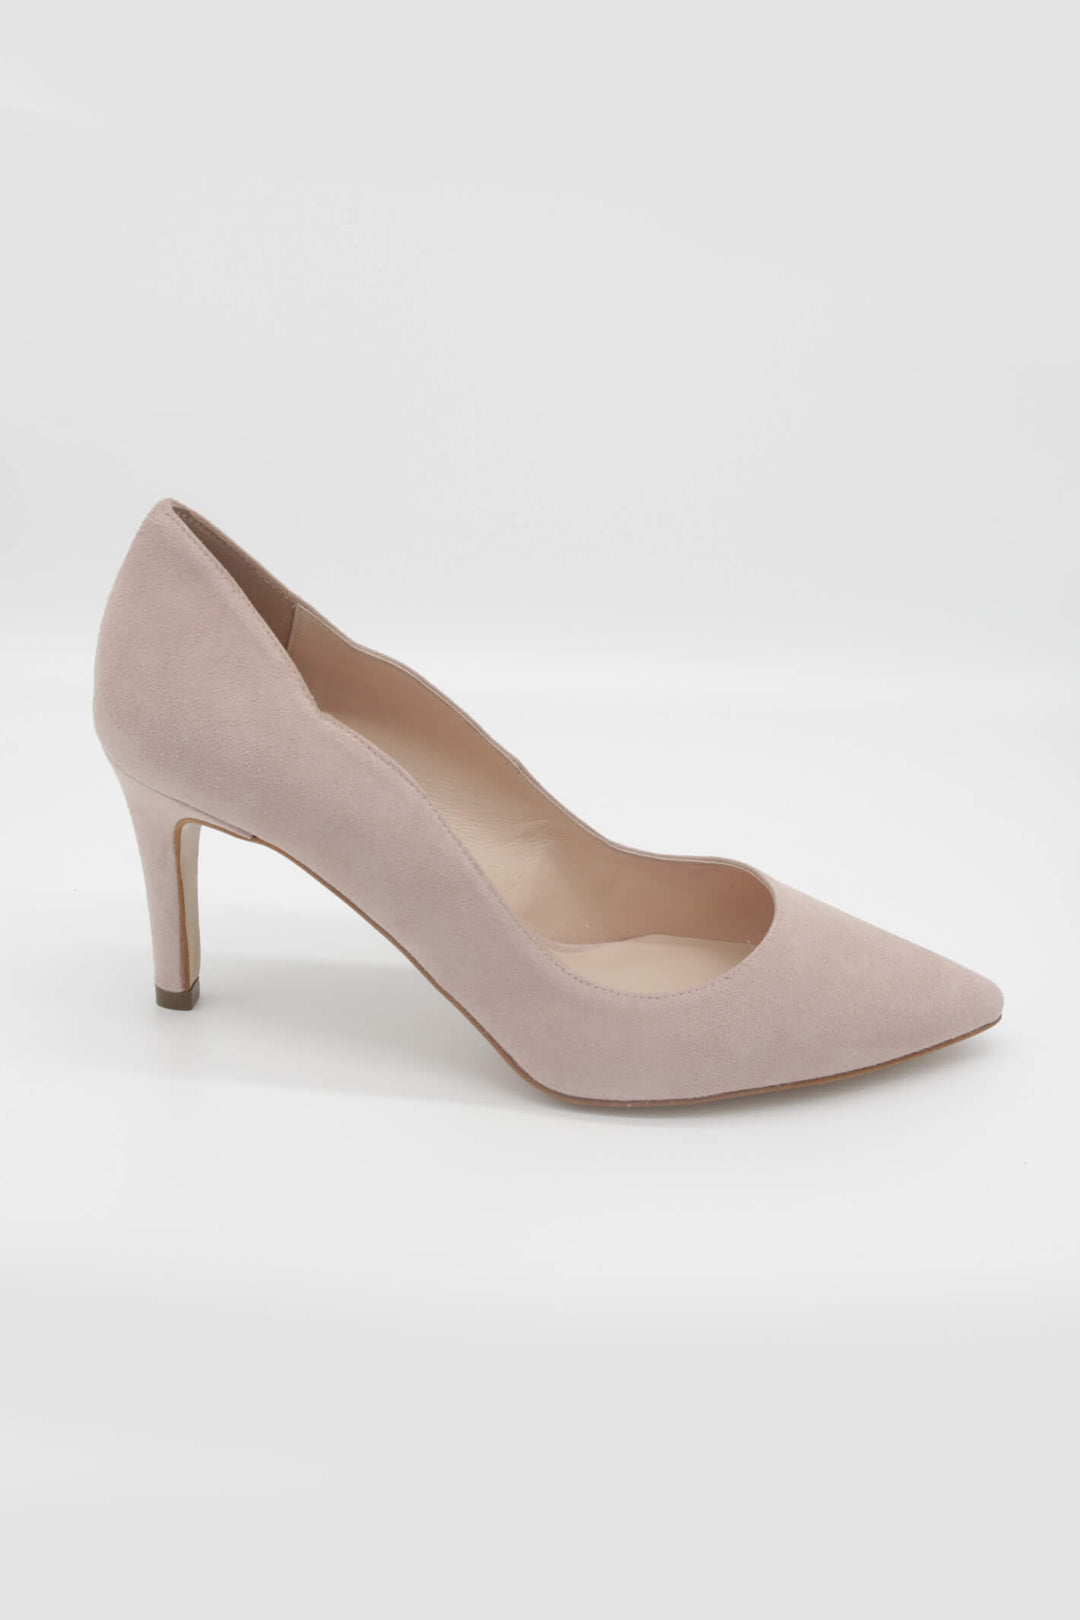 Lisa Kay Carlton Blush Pink Suede Shoe - Experience Boutique